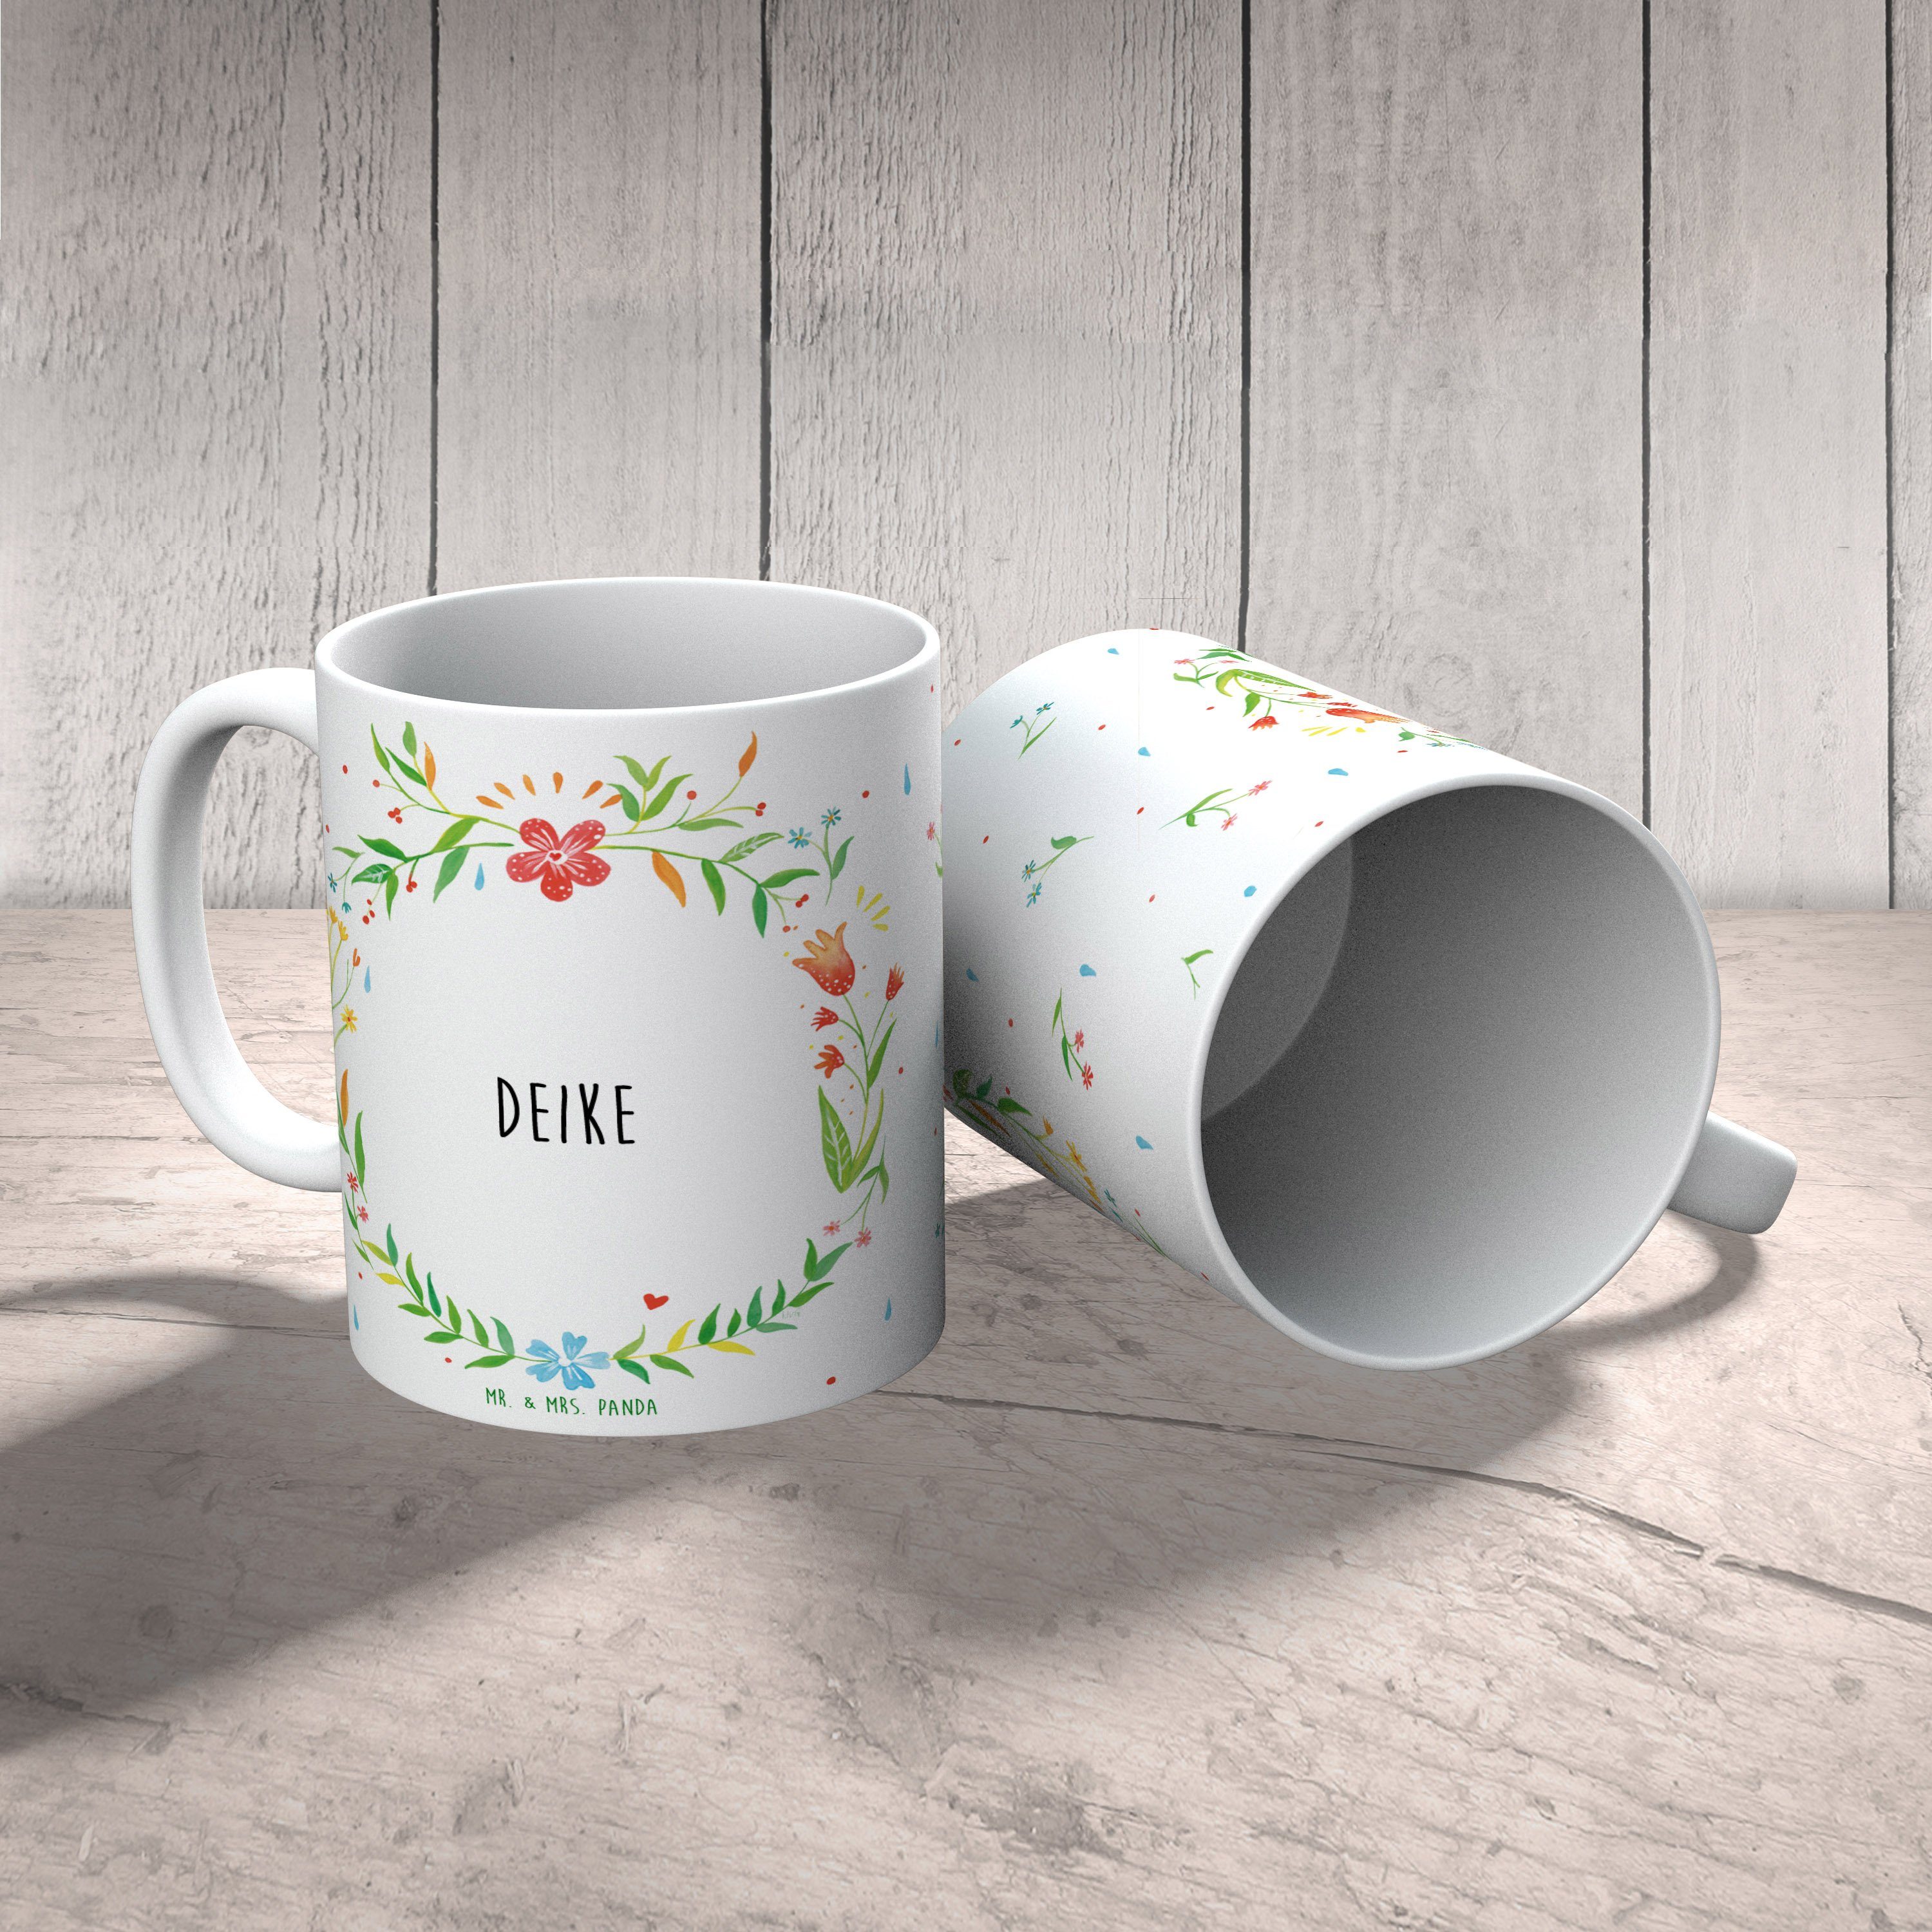 Mr. & Mrs. Panda Tasse Kaf, Motive, Tasse Tasse Geschenk, Keramik Sprüche, Deike Büro - Tasse, Tasse